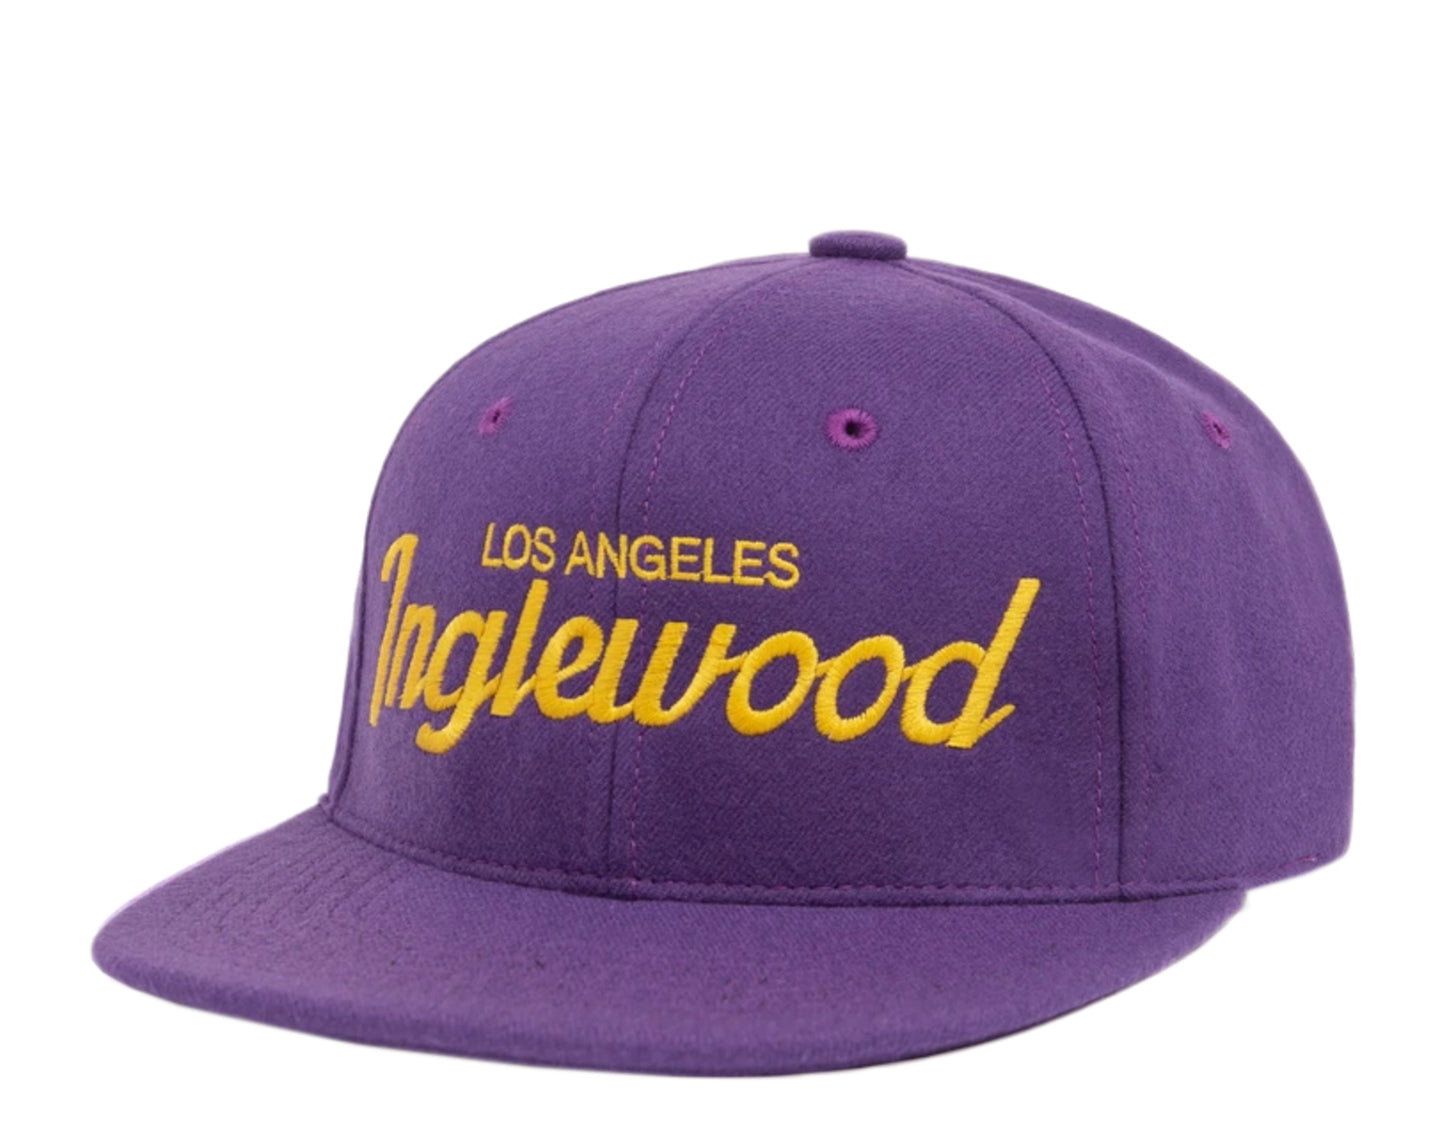 Hood Hat USA Inglewood LA Wool Snapback